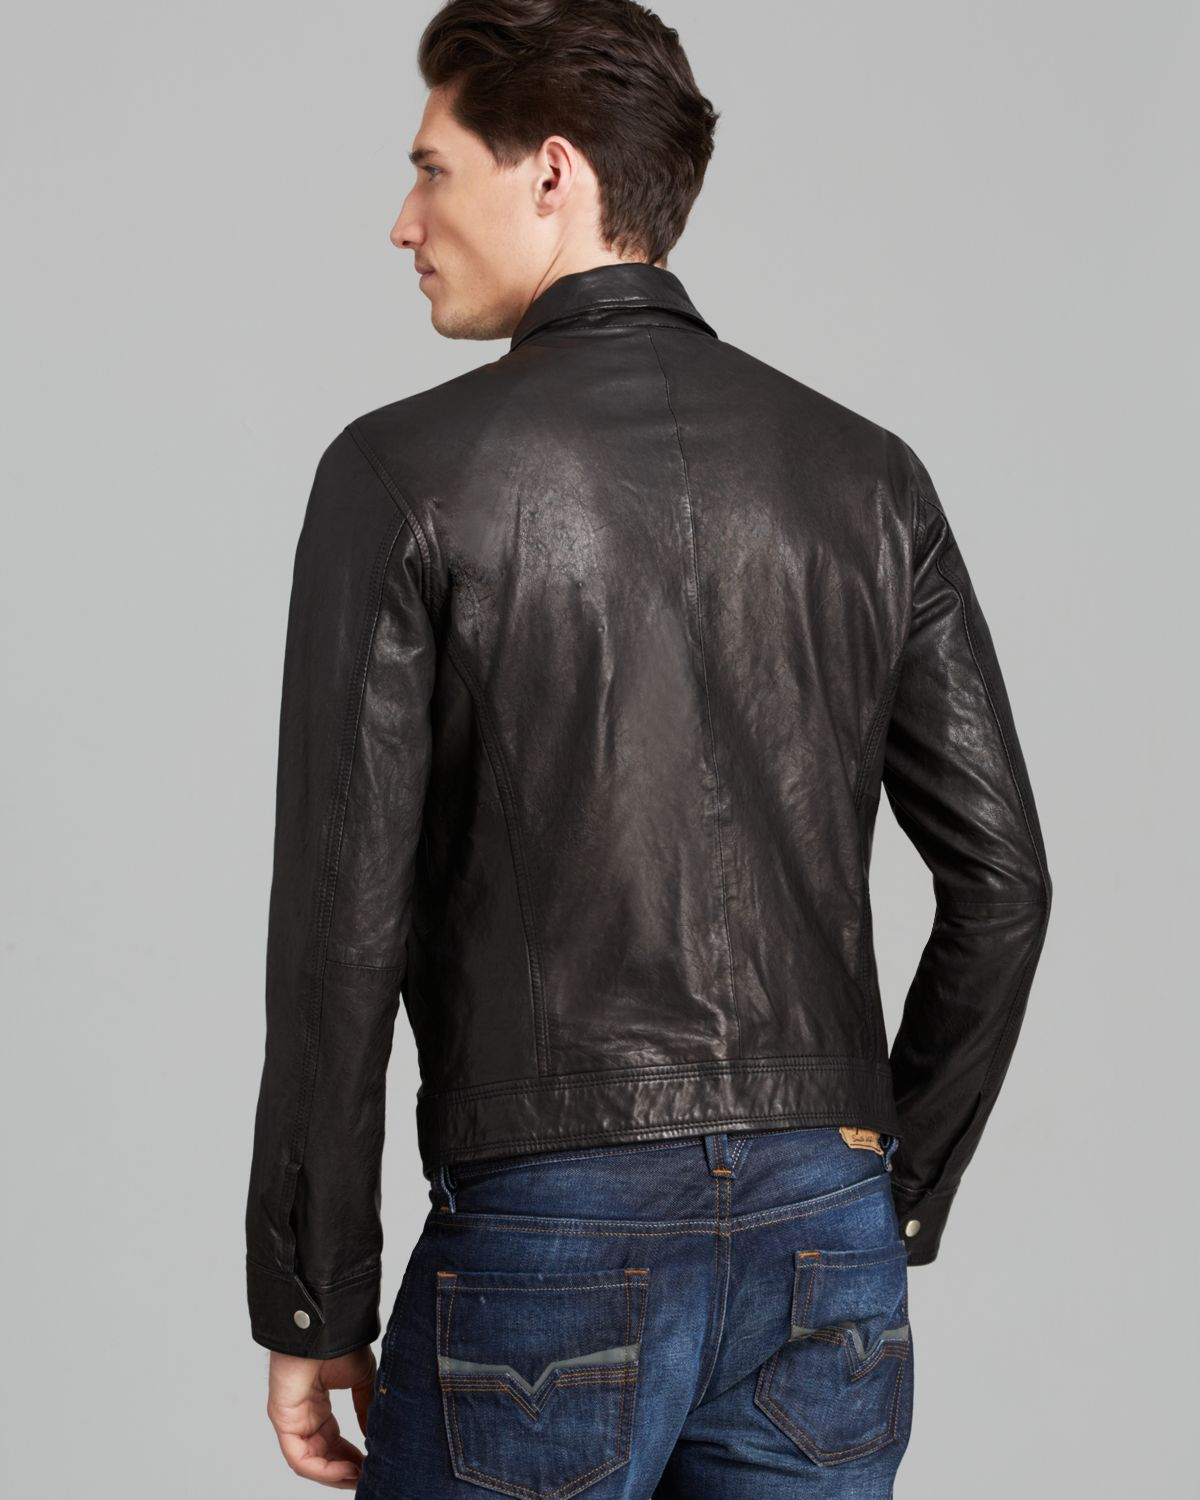 Lyst - Diesel Lbunmi Leather Jacket in Black for Men